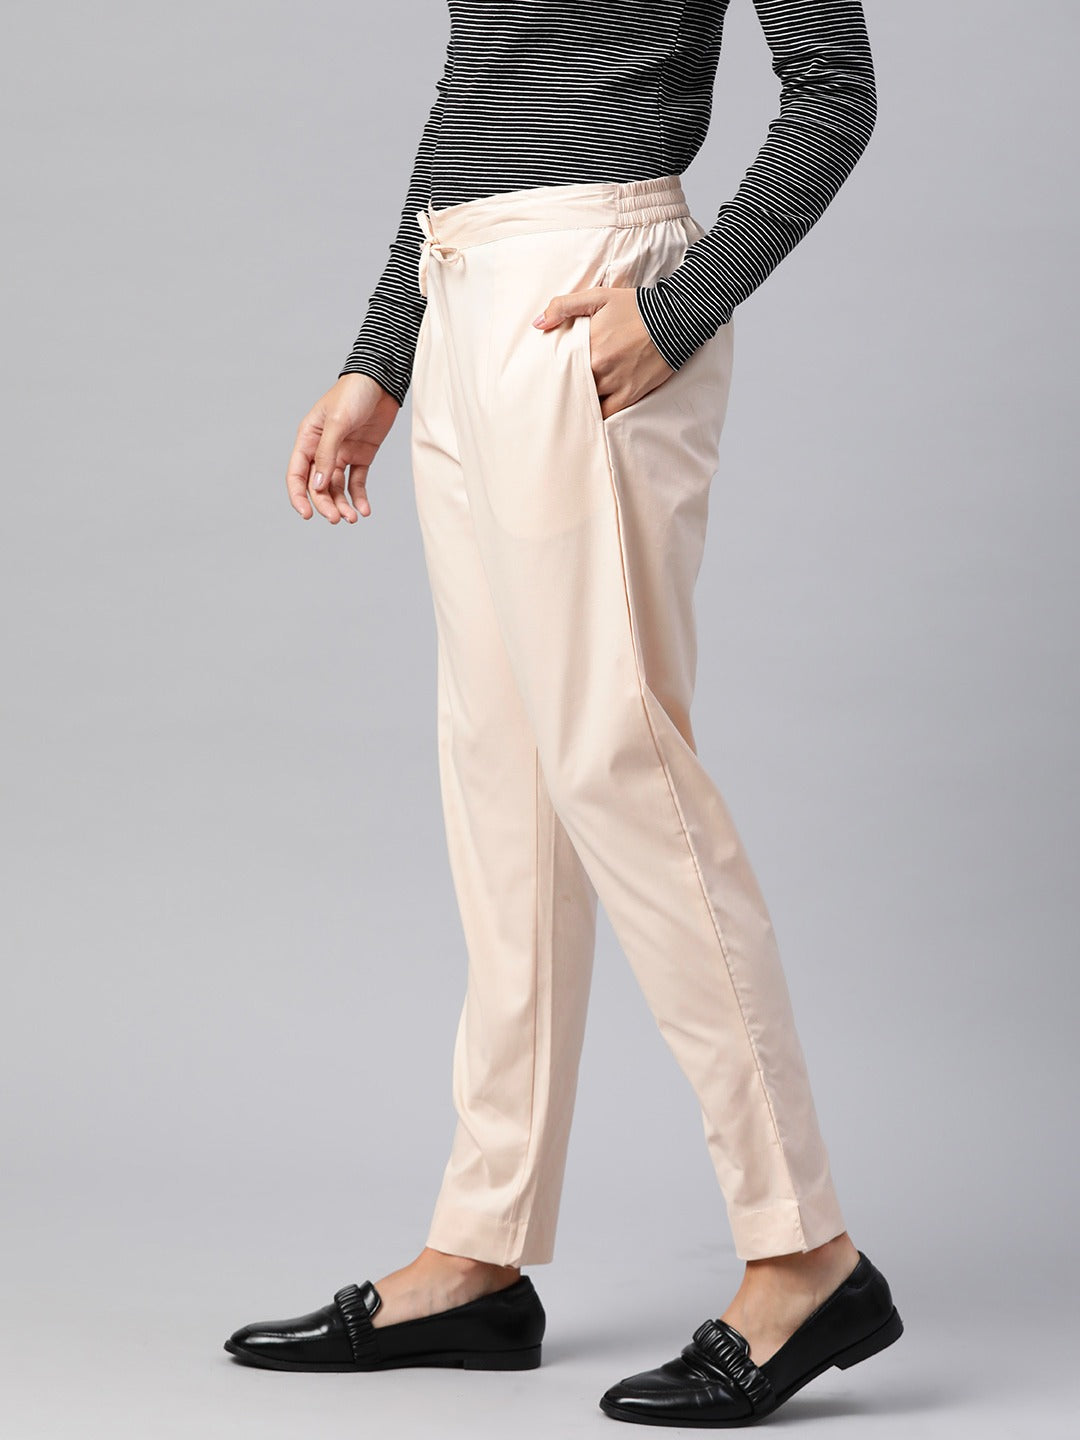 Cotton Lycra Fabric Cream Color Trouser